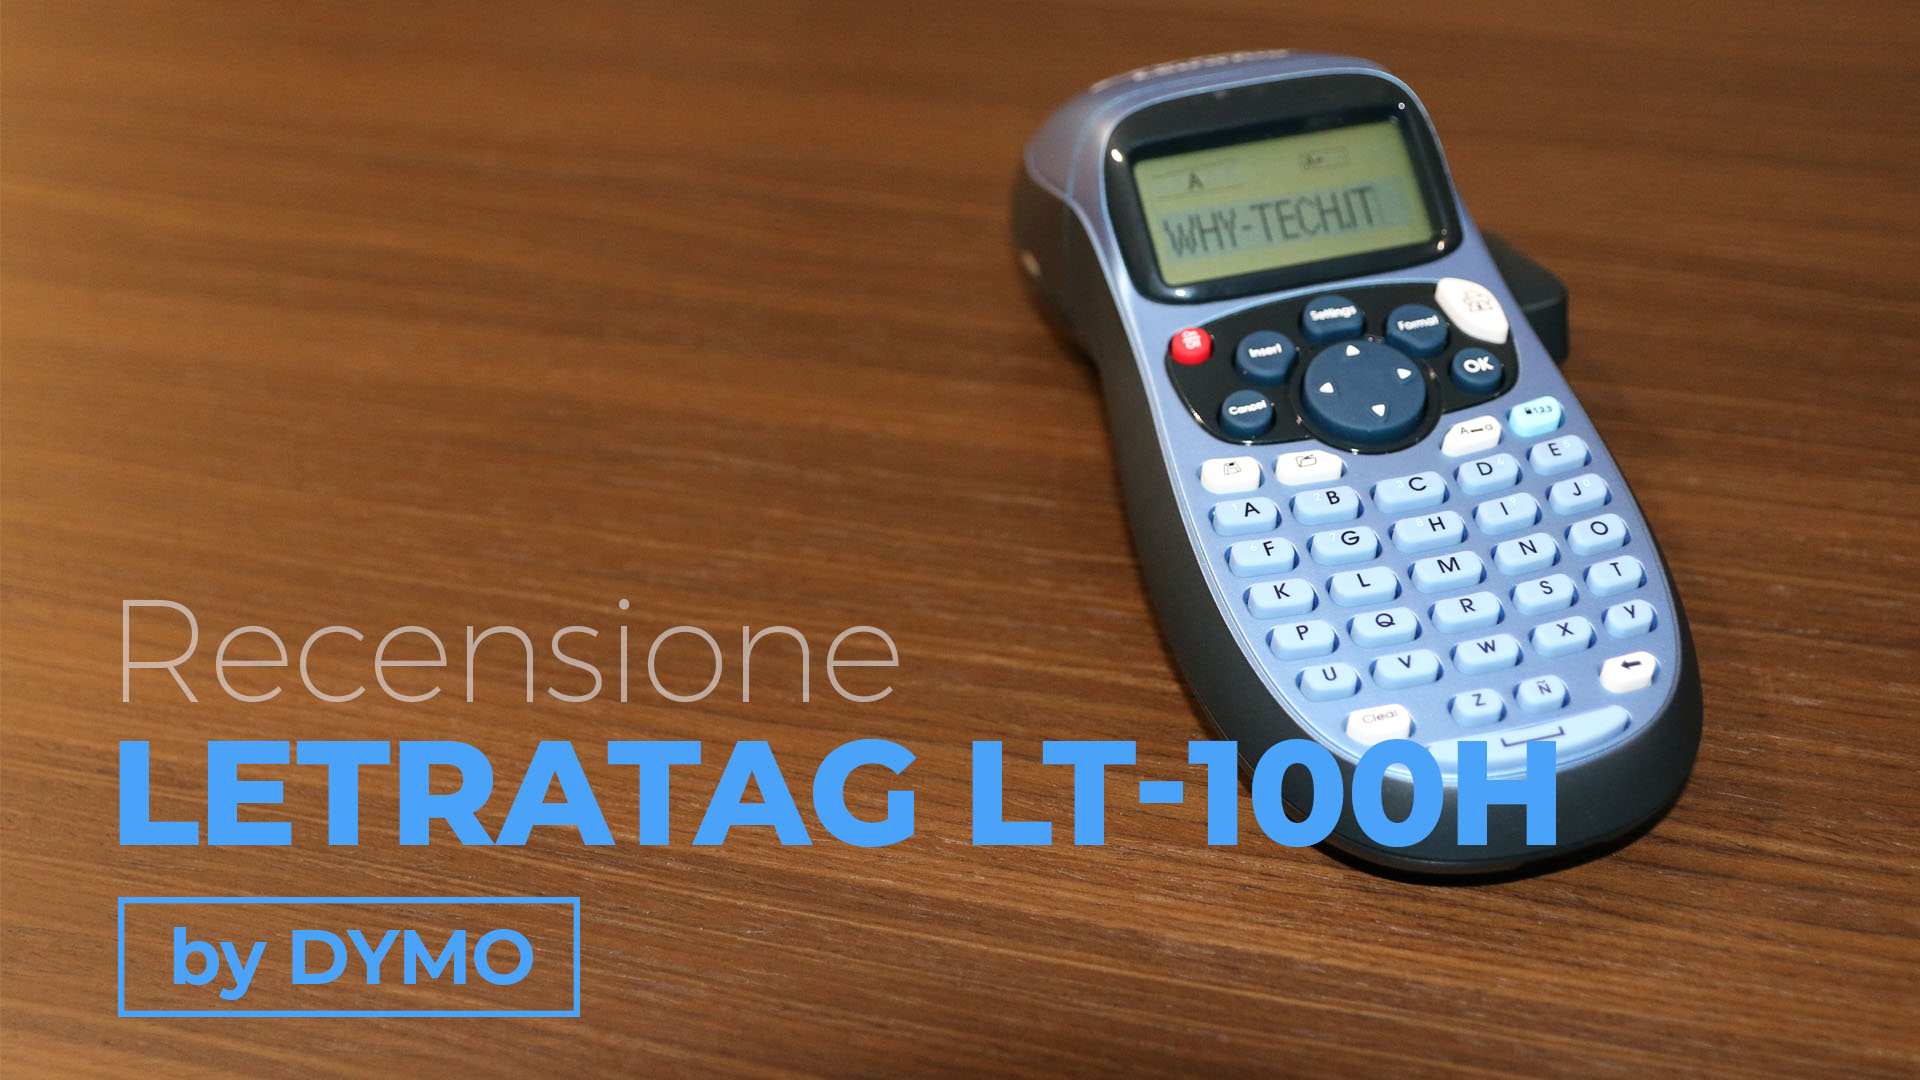 LetraTag-LT-100H